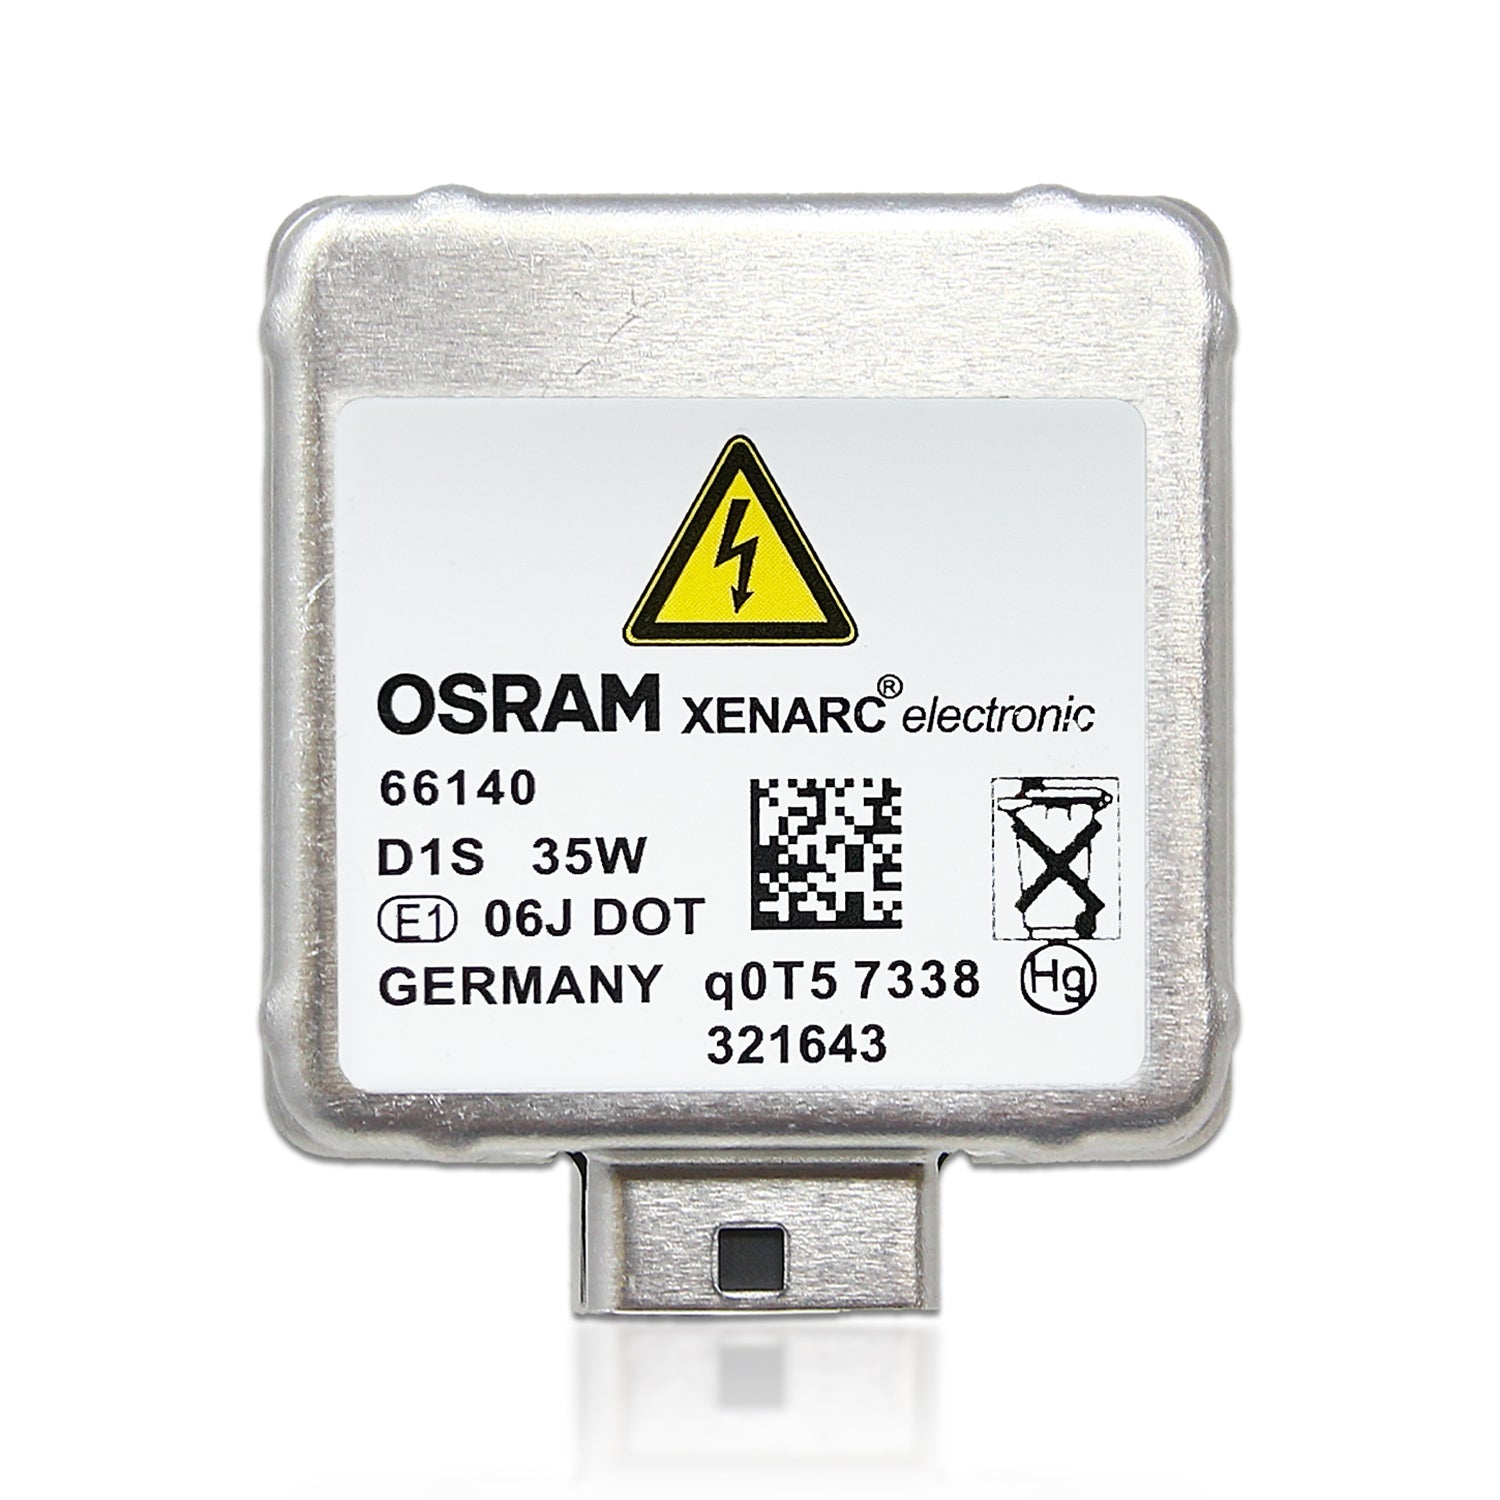 OSRAM Original - HID/Xenon Replacement Bulbs (pair) – BRI Source